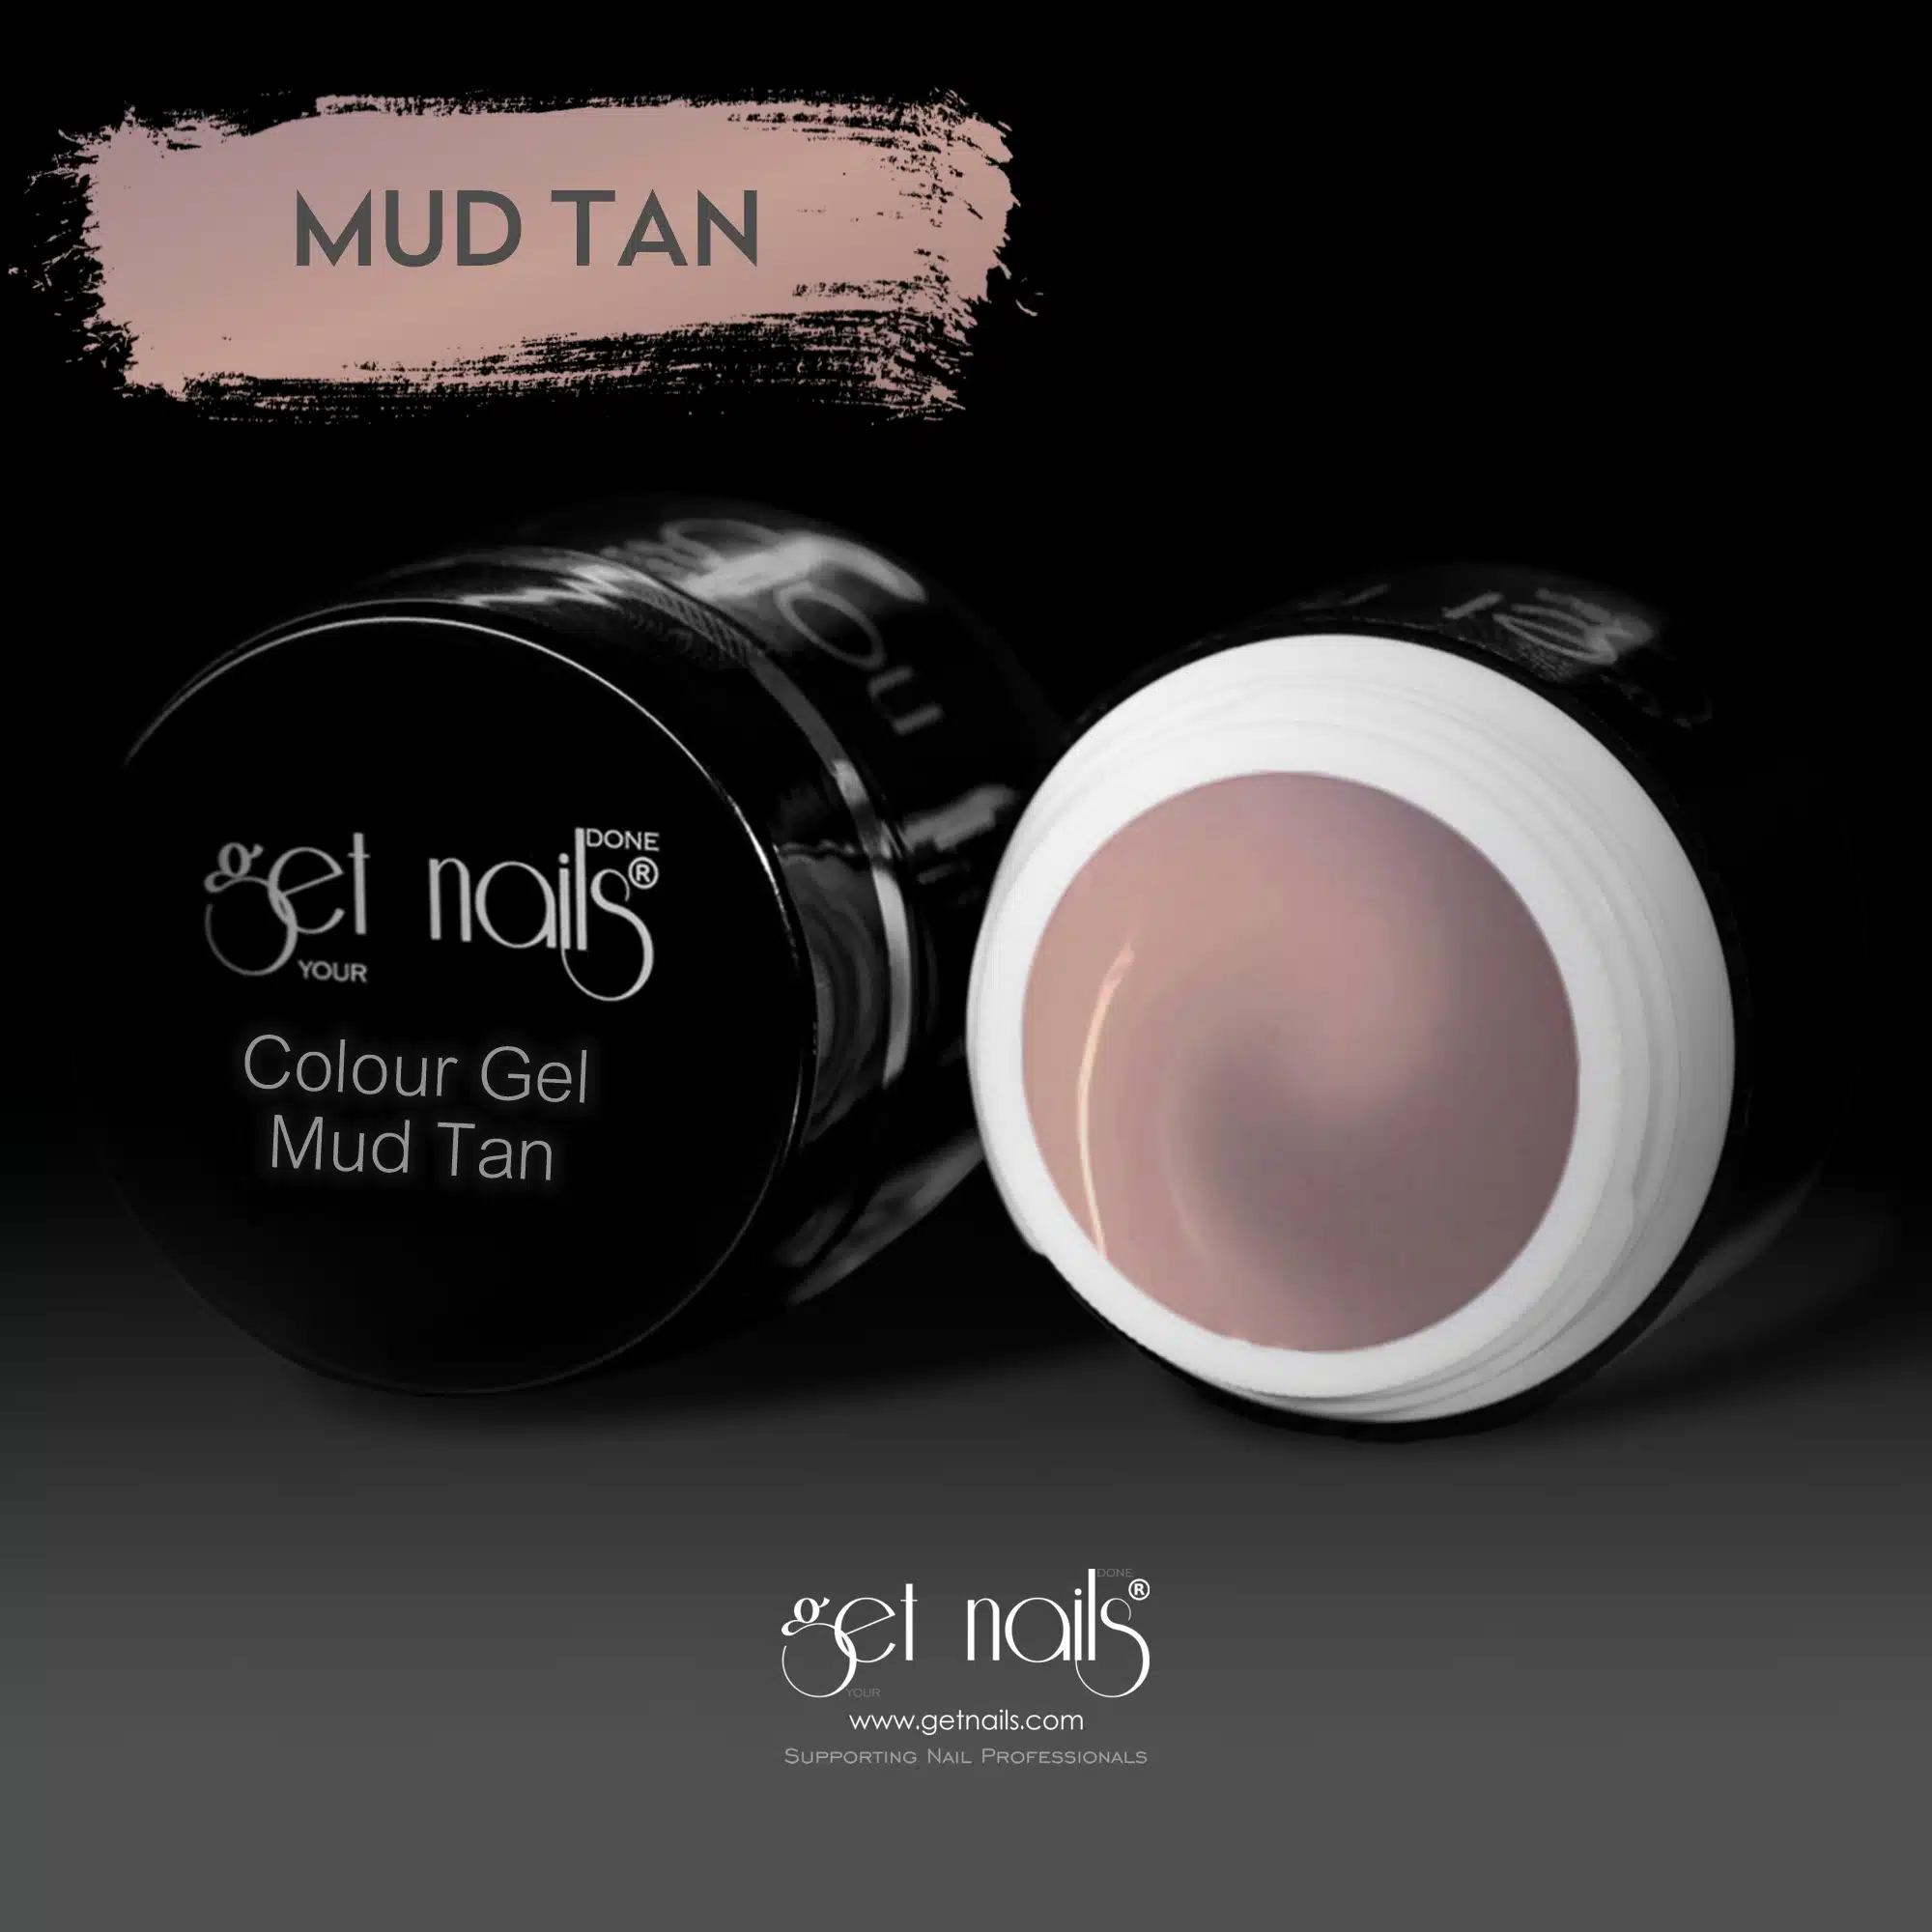 Get Nails Austria - Gel colorato Mud Tan 5g